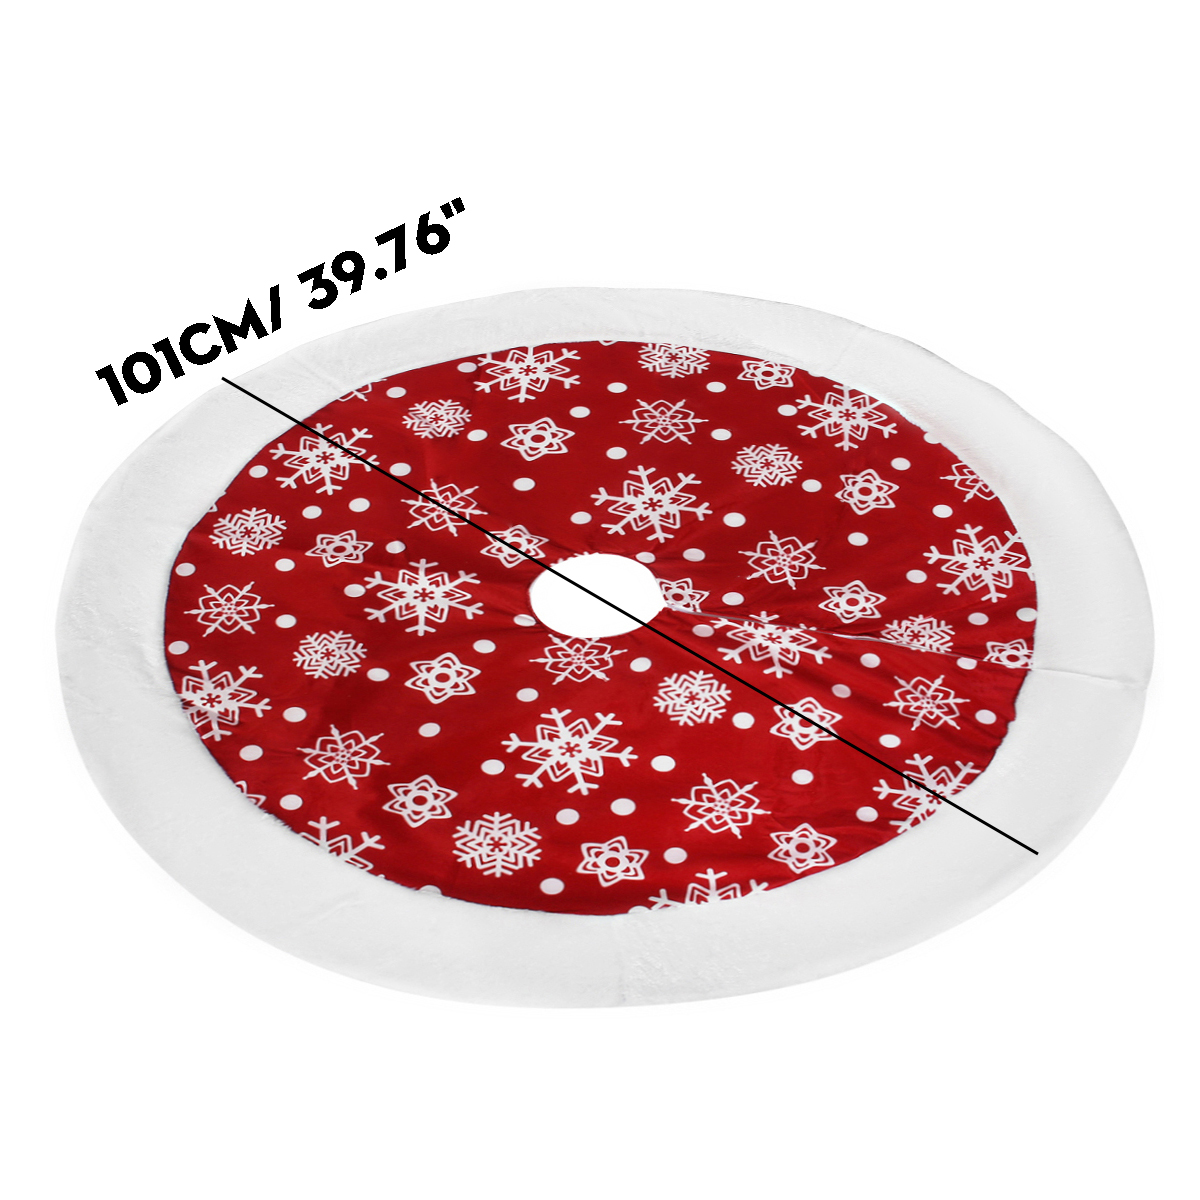 101CM-Christmas-Tree-Skirt-Carpet-New-Year-Decorations-Xmas-Decoration-Tree-Skirt-Ornaments-Festive--1770954-9